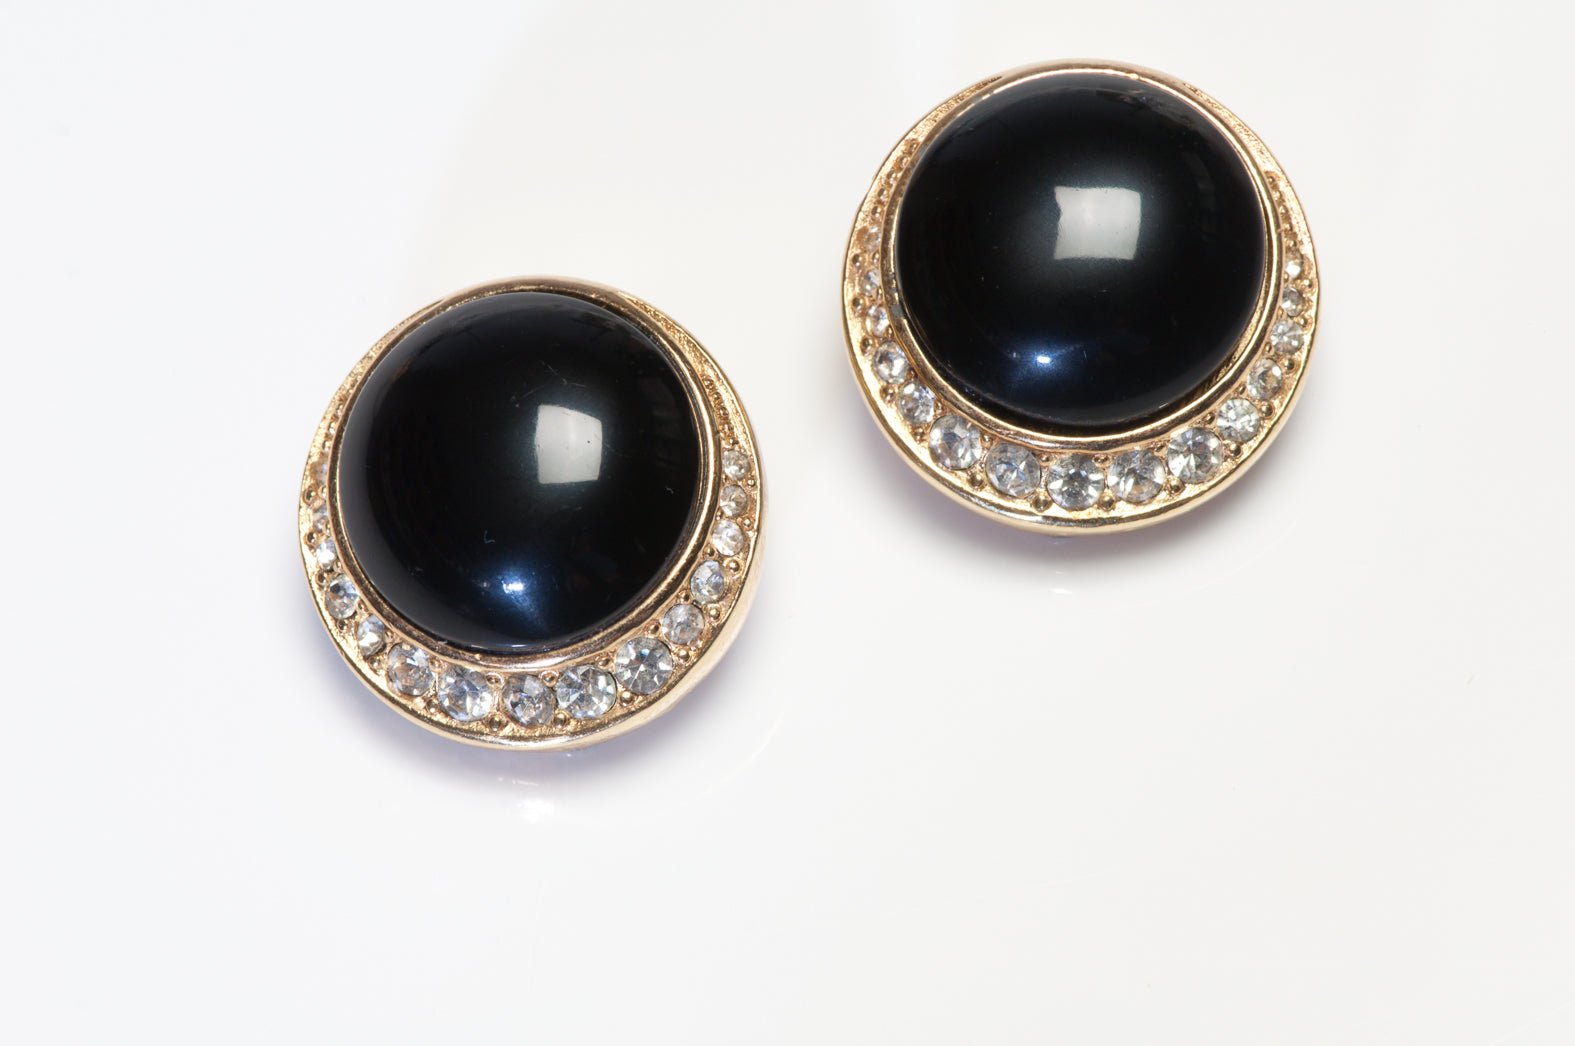 Vintage Christian Dior Black Cabochon Resin Crystal Earrings